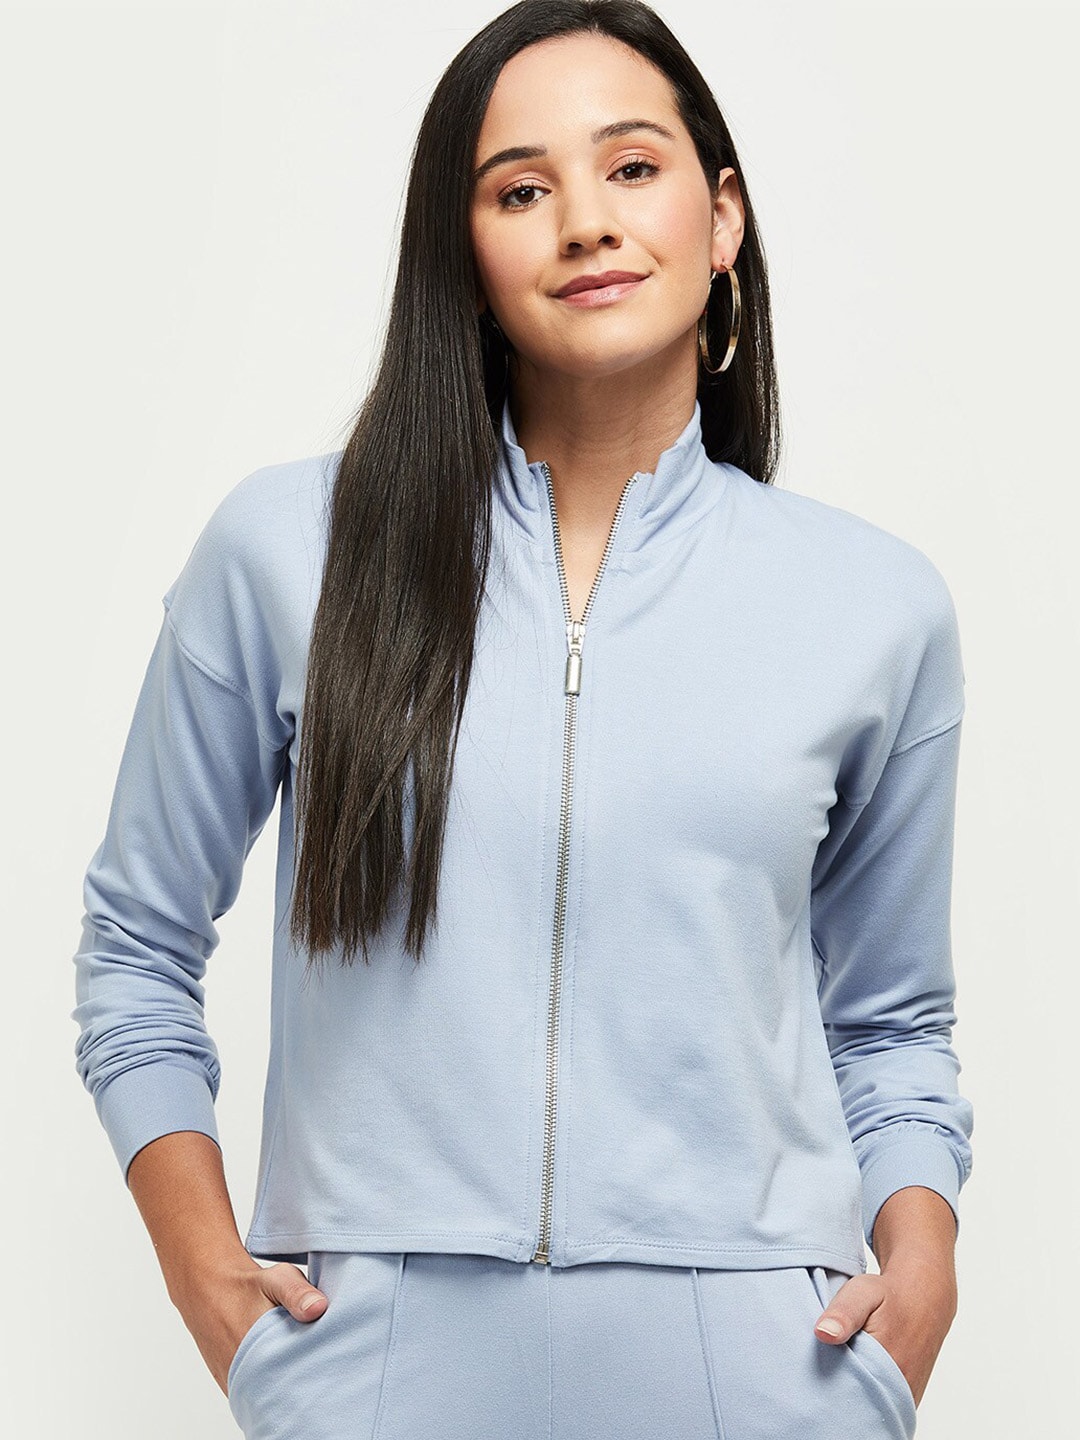 max Women Blue Sweatshirt Price in India